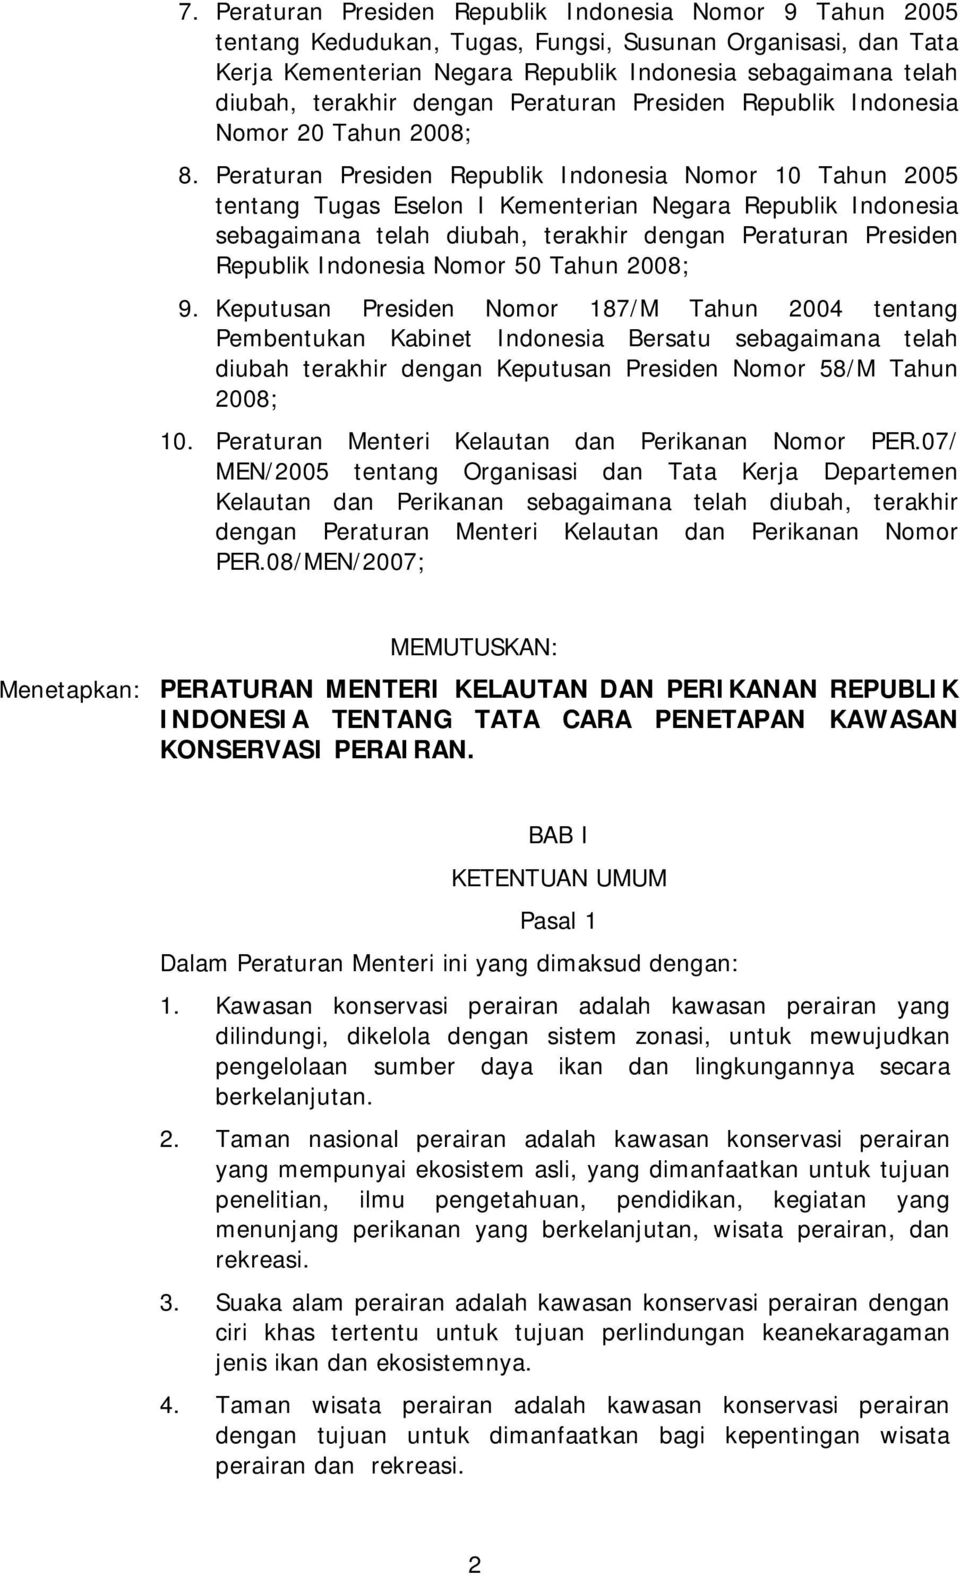 Peraturan Presiden Republik Indonesia Nomor 10 Tahun 2005 tentang Tugas Eselon I Kementerian Negara Republik Indonesia sebagaimana telah diubah, terakhir dengan Peraturan Presiden Republik Indonesia